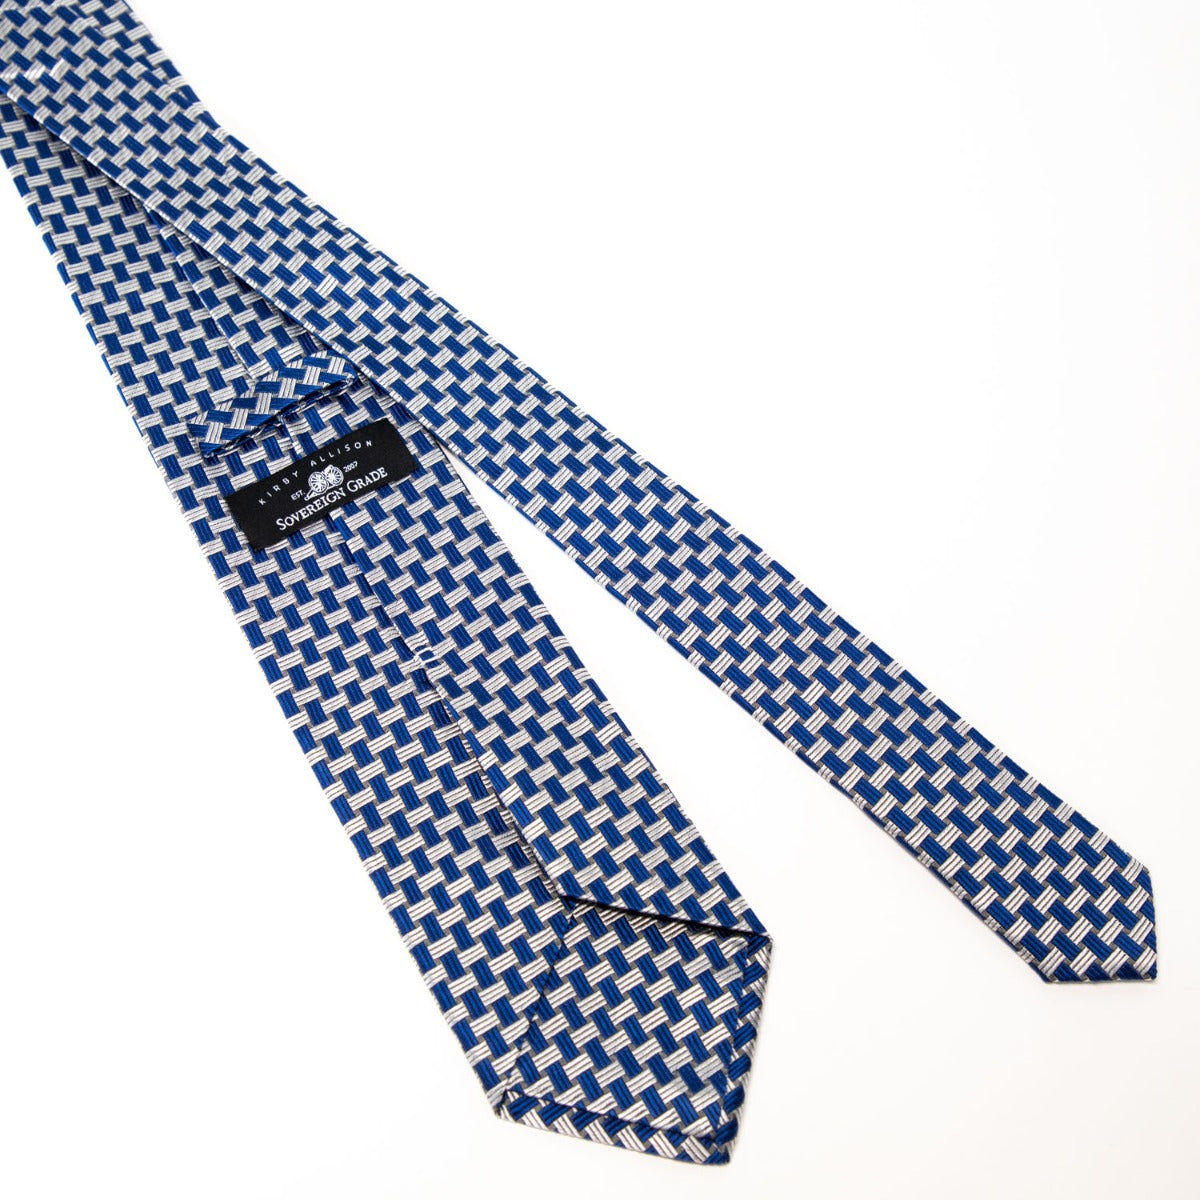 A Sovereign Grade Blue Basket Weave Silk Tie by KirbyAllison.com.